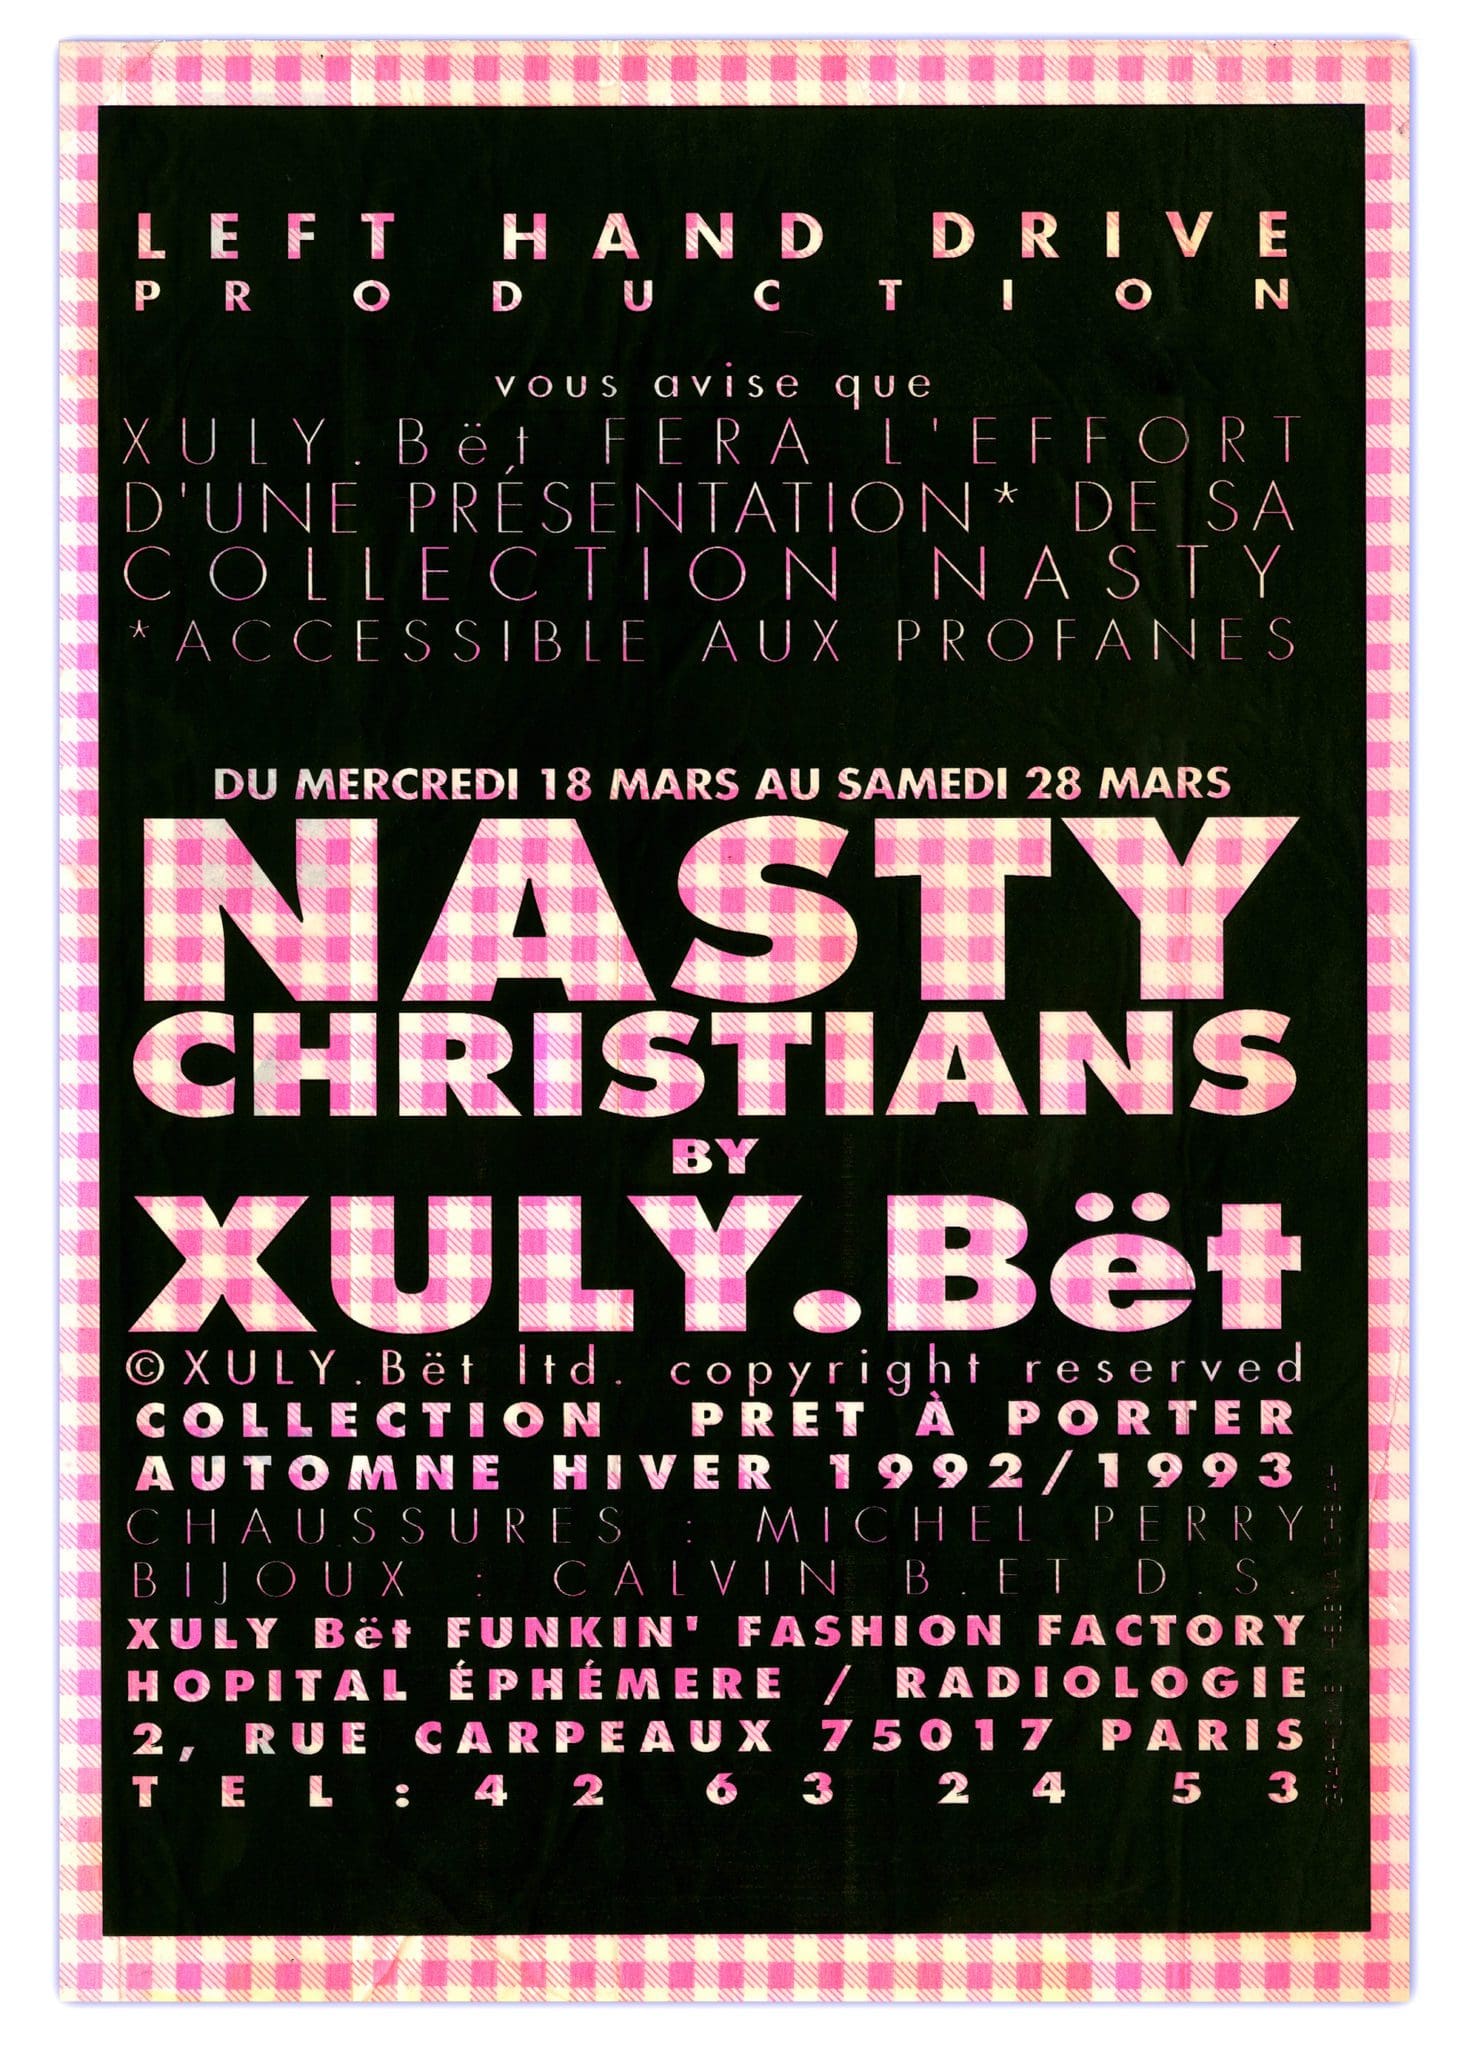 nasty christians by Xuly.bët l'invatation pour la collection automne hiver 1992/1993 impression sur motif vichy tati by ichetkar